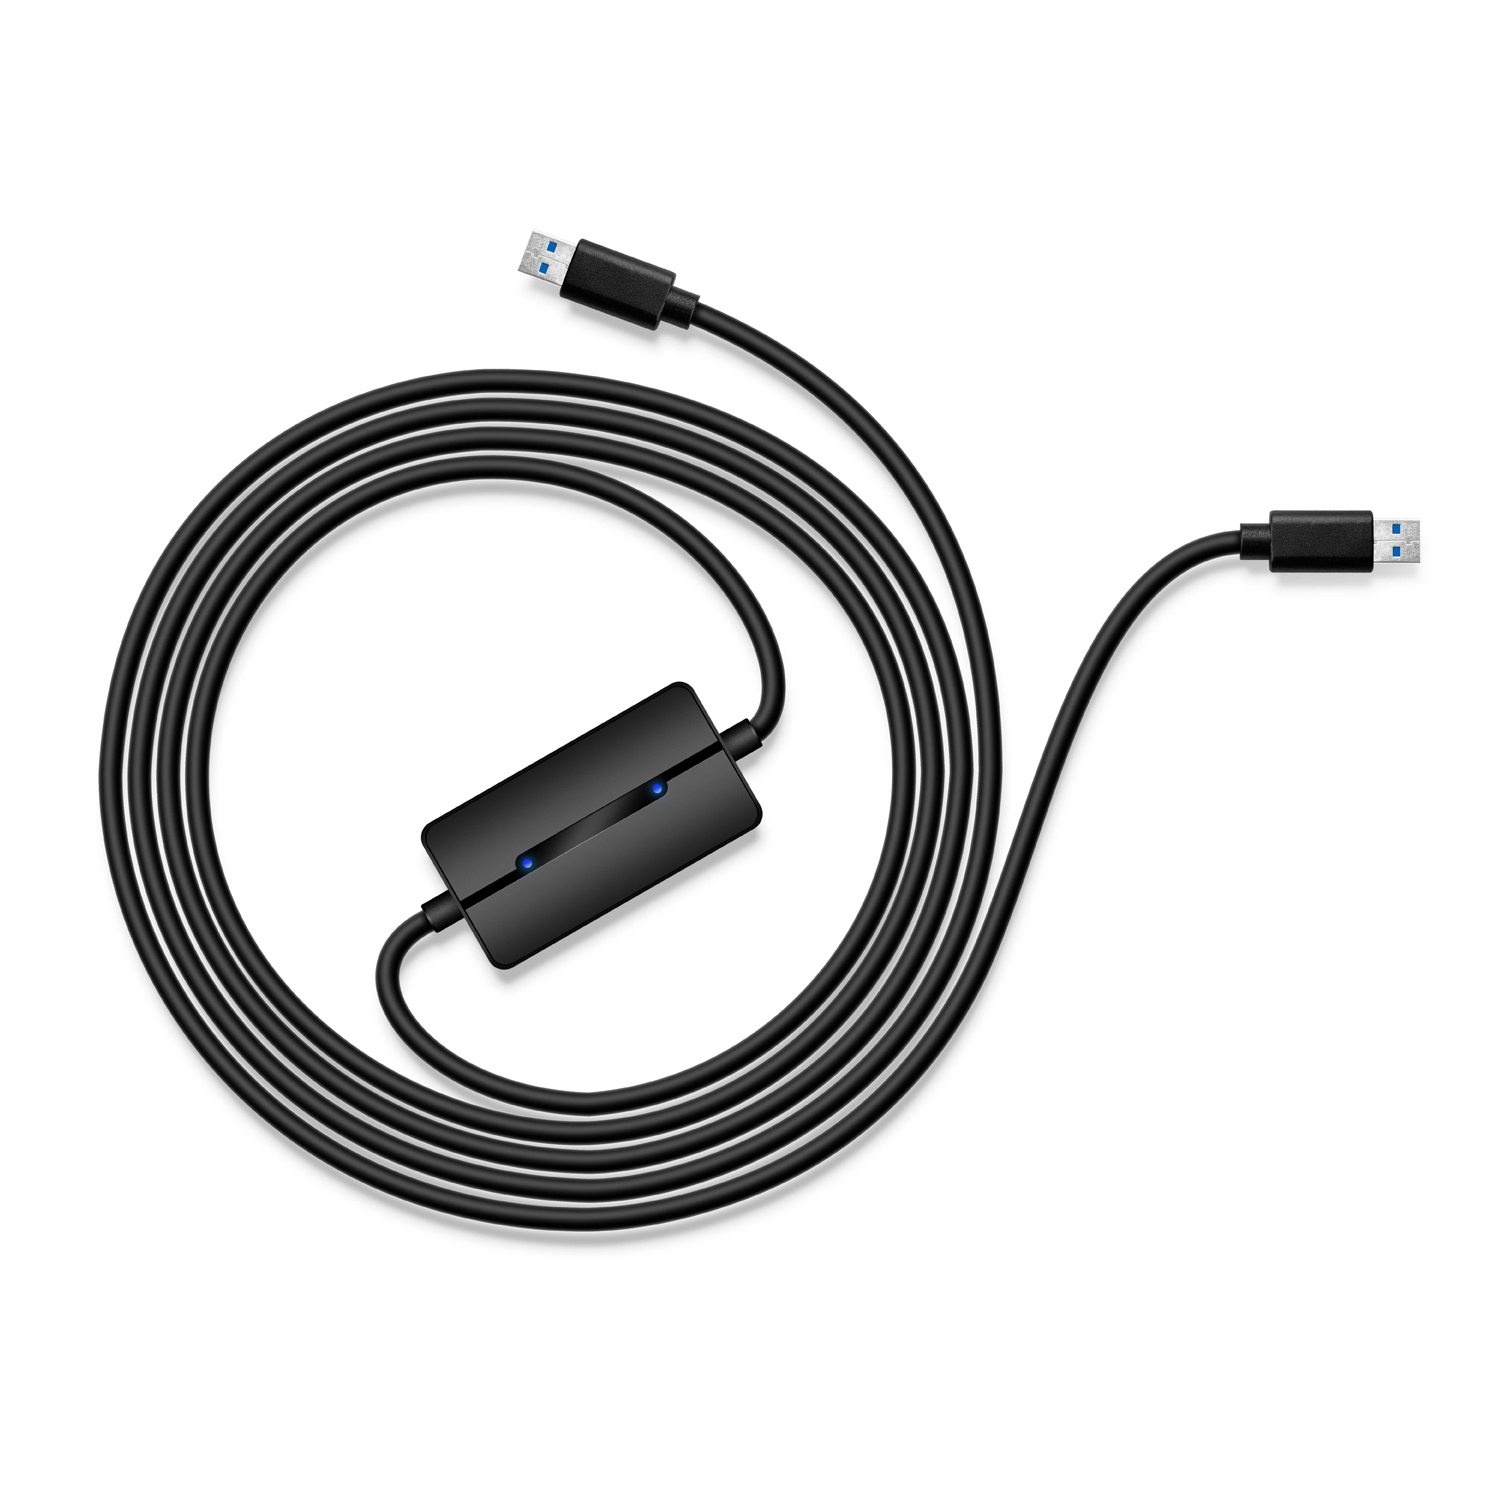 U3TRAN-2 | USB 3.0 Data Transfer Cable for Mac and Windows